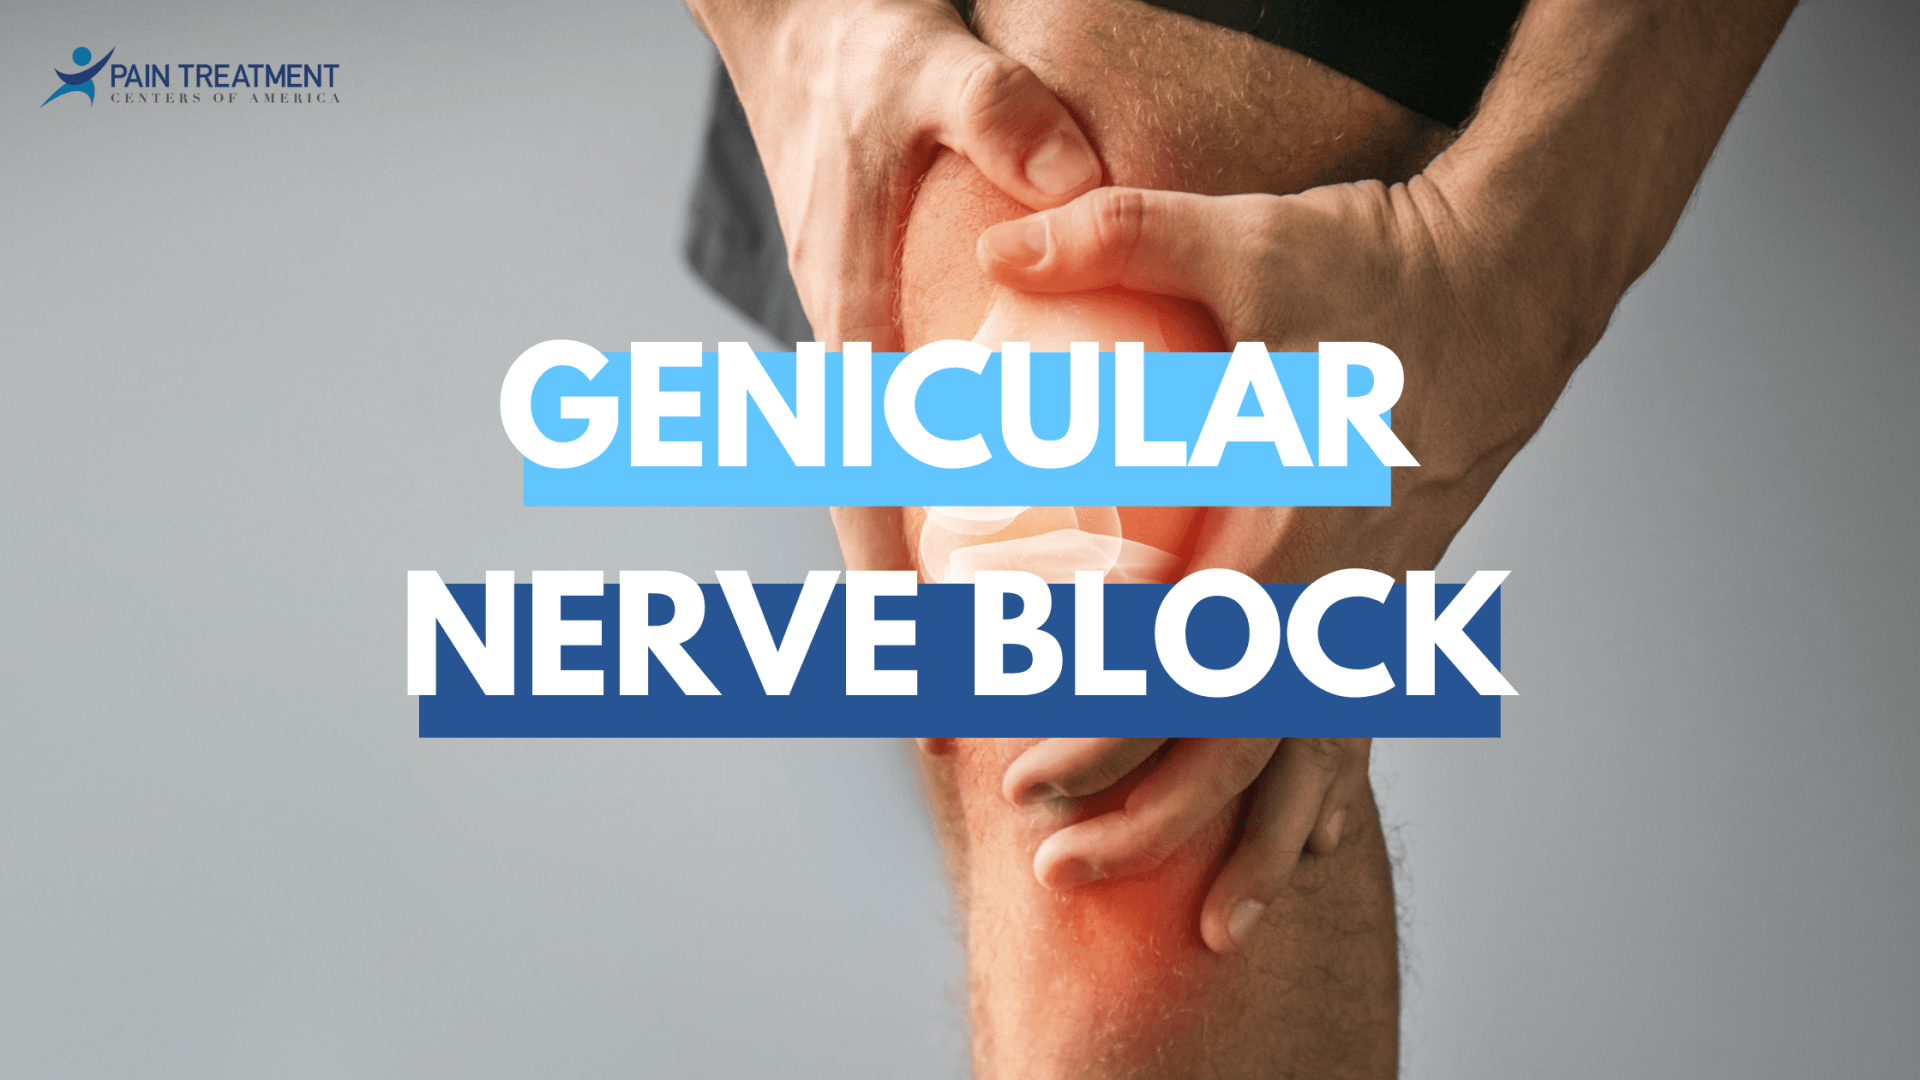 Genicular Nerve Block Graphic Pain Treatment Centers of America 